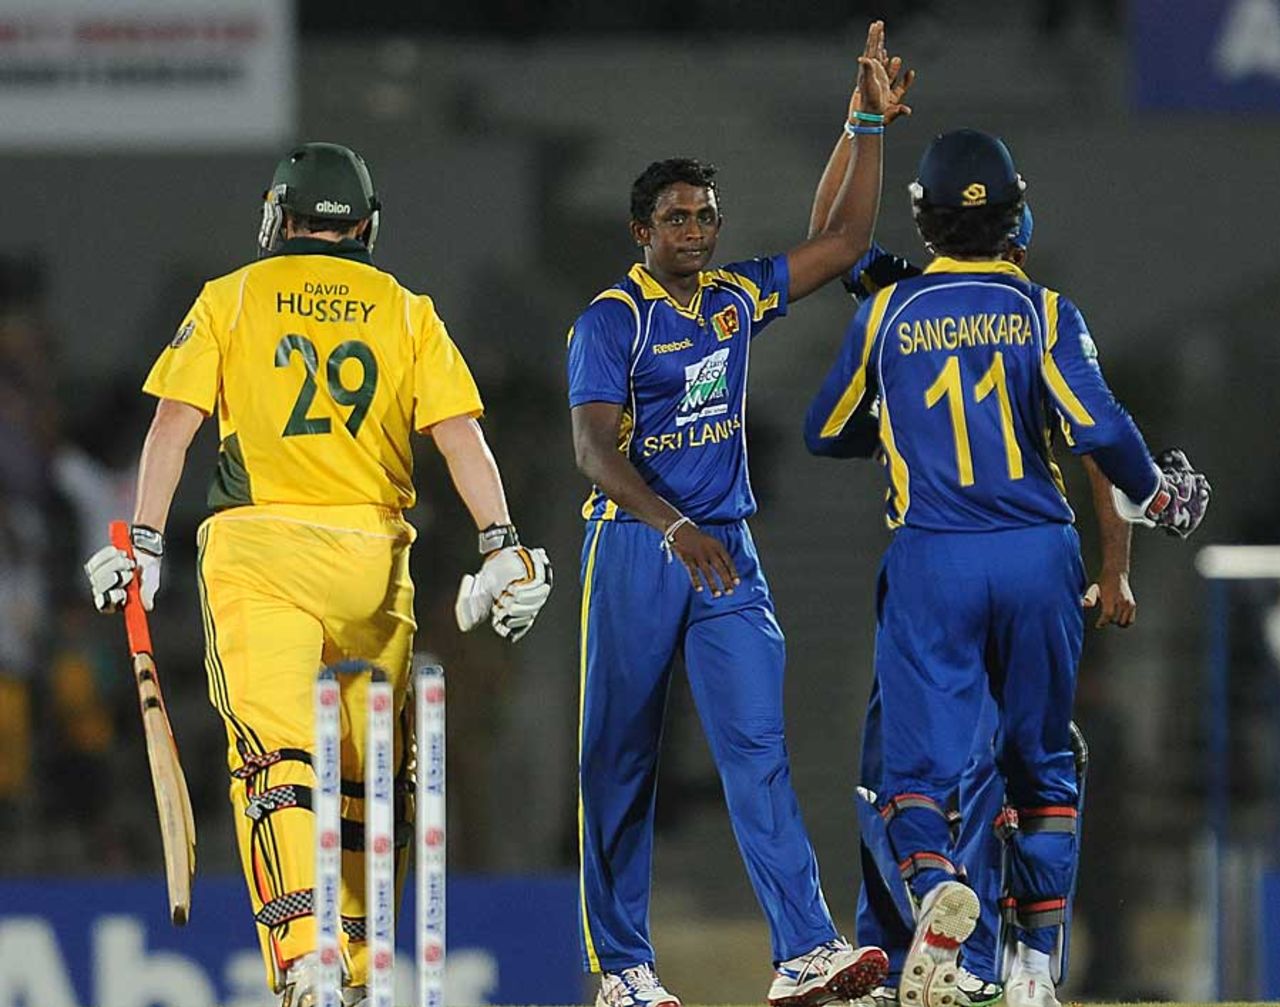 Ajantha Mendis sees off David Hussey, Sri Lanka v Australia, 3rd ODI, Hambantota, August 16, 2011